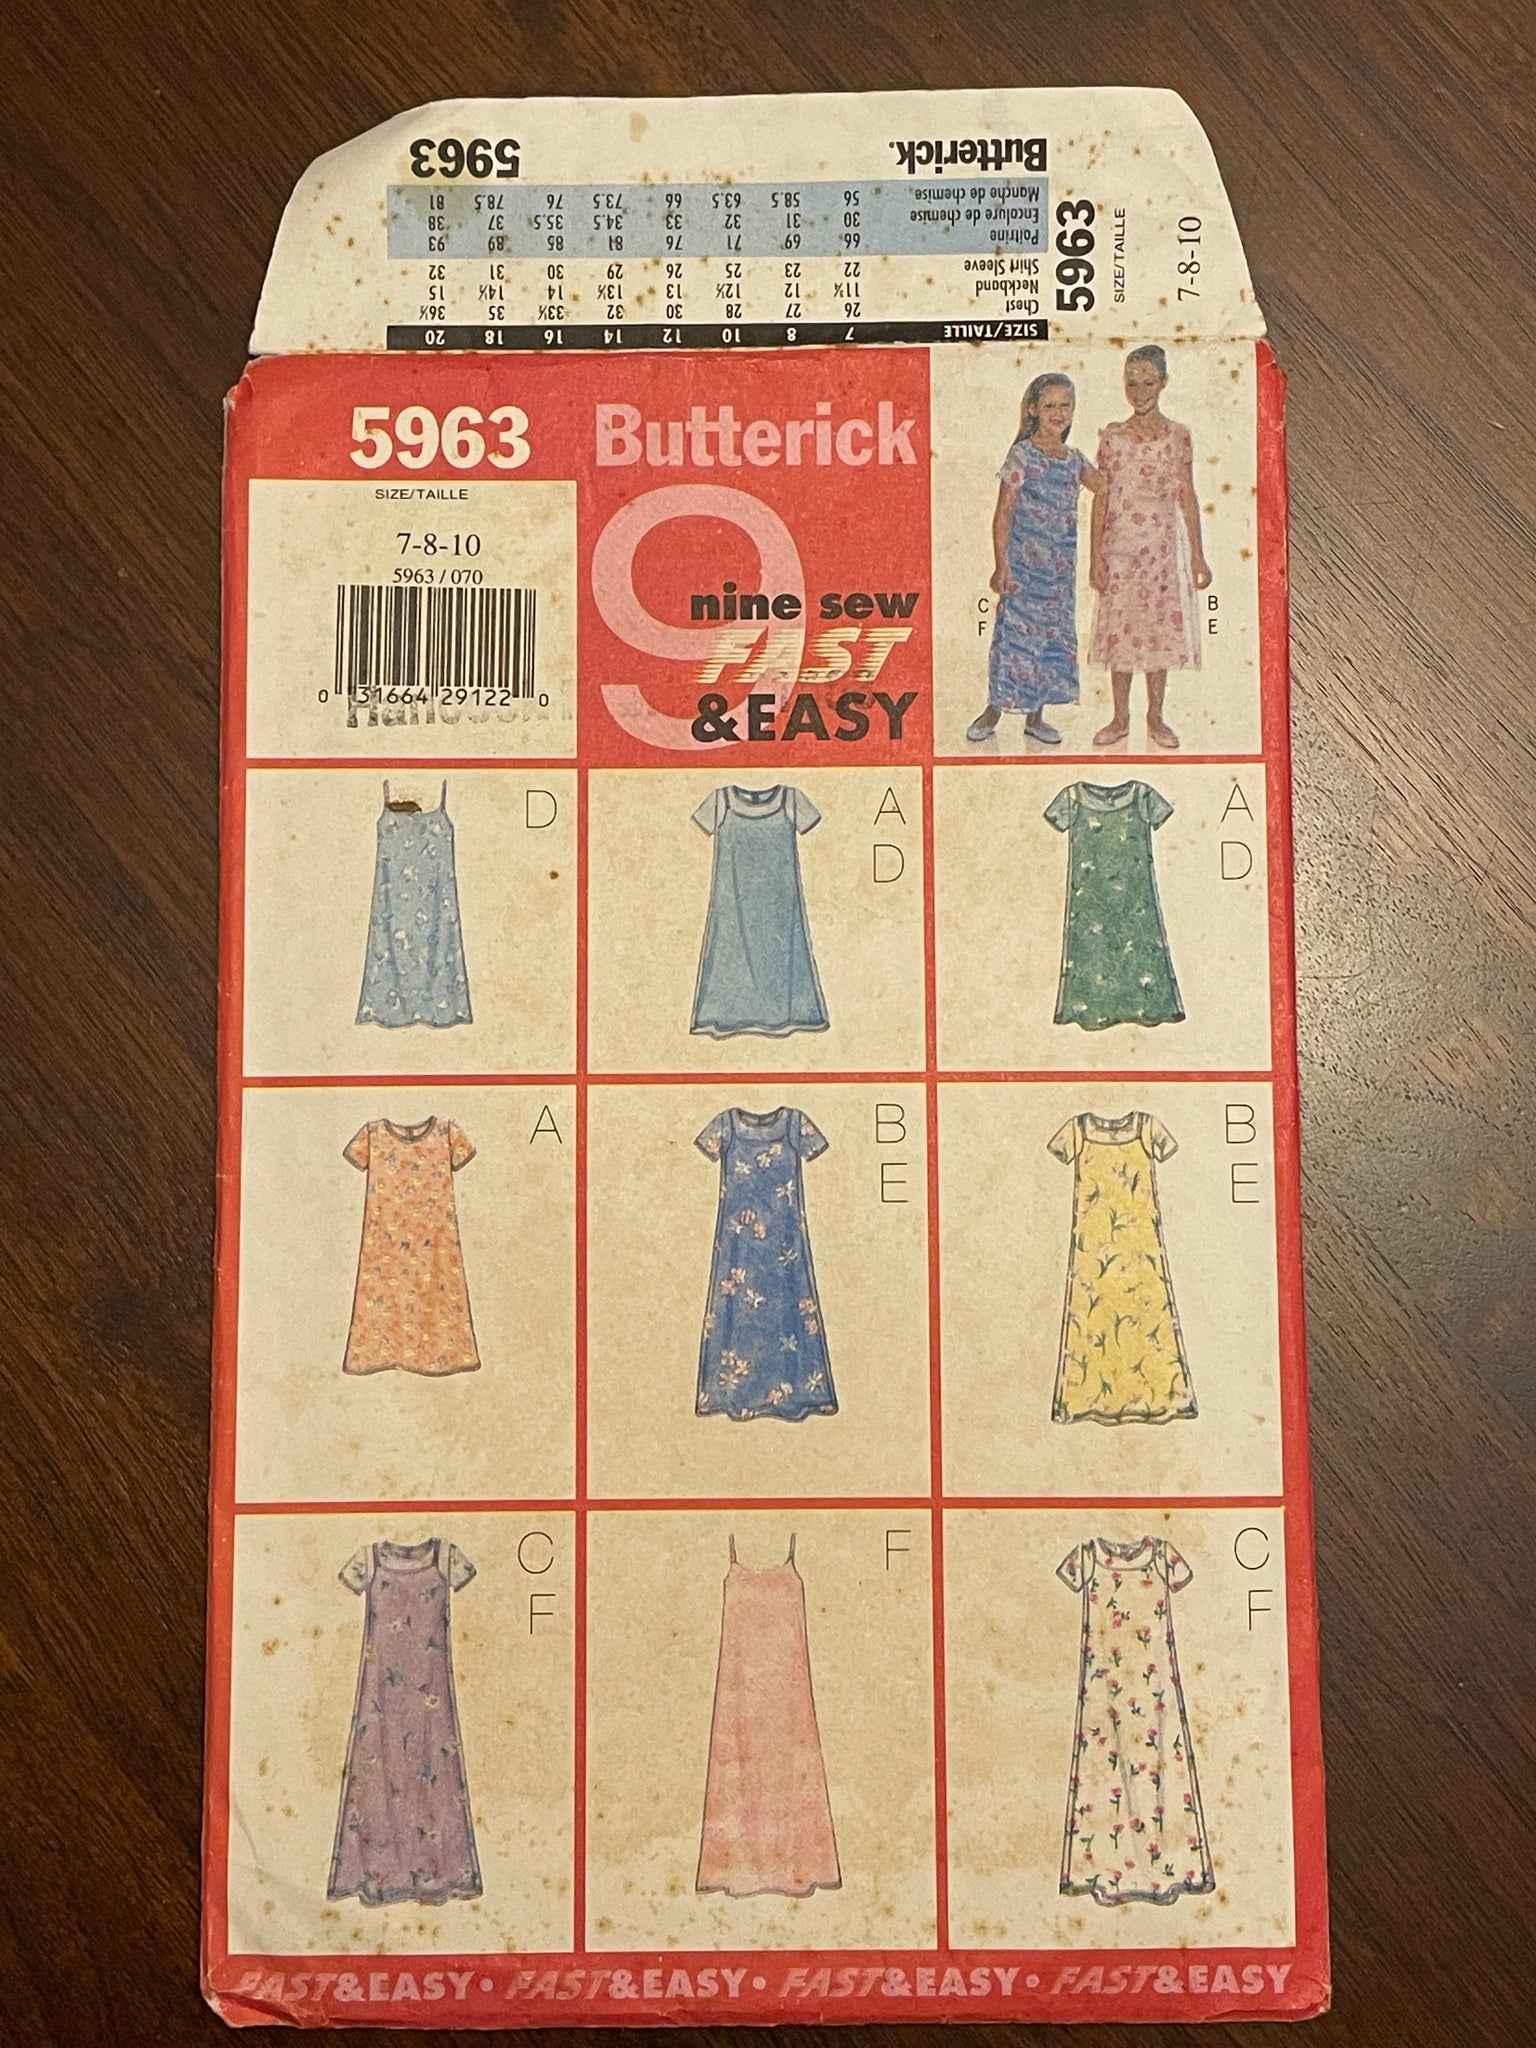 SALE 1998 Butterick Pattern 5963 - Girl's Dress